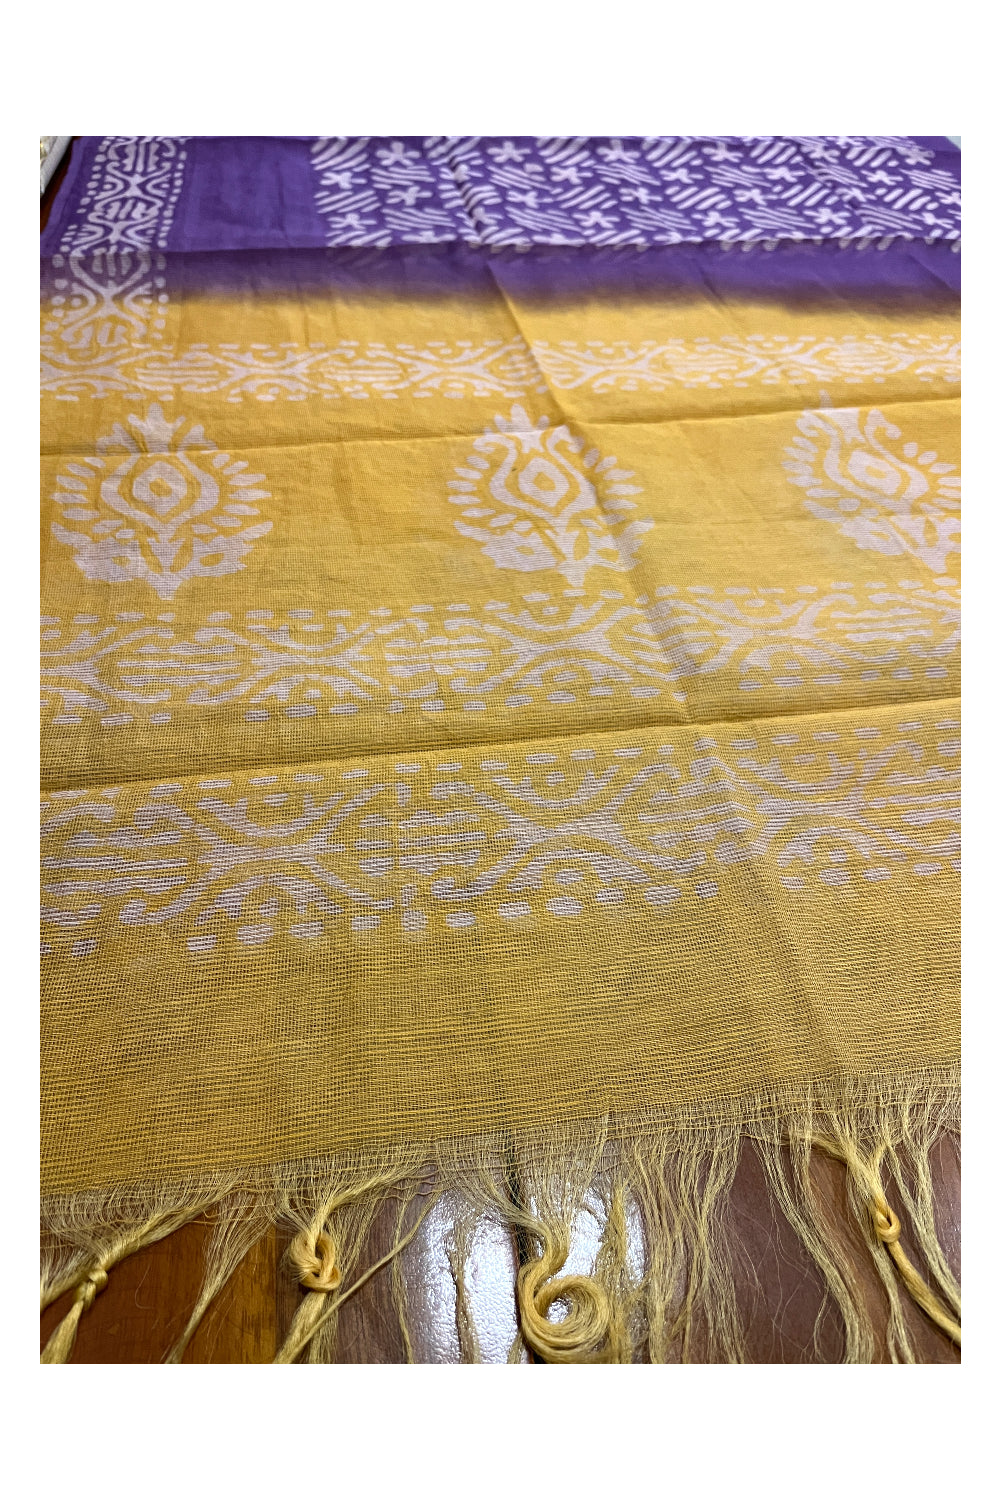 Southloom™ Kota Churidar Salwar Suit Material in Yellow with Floral Prints